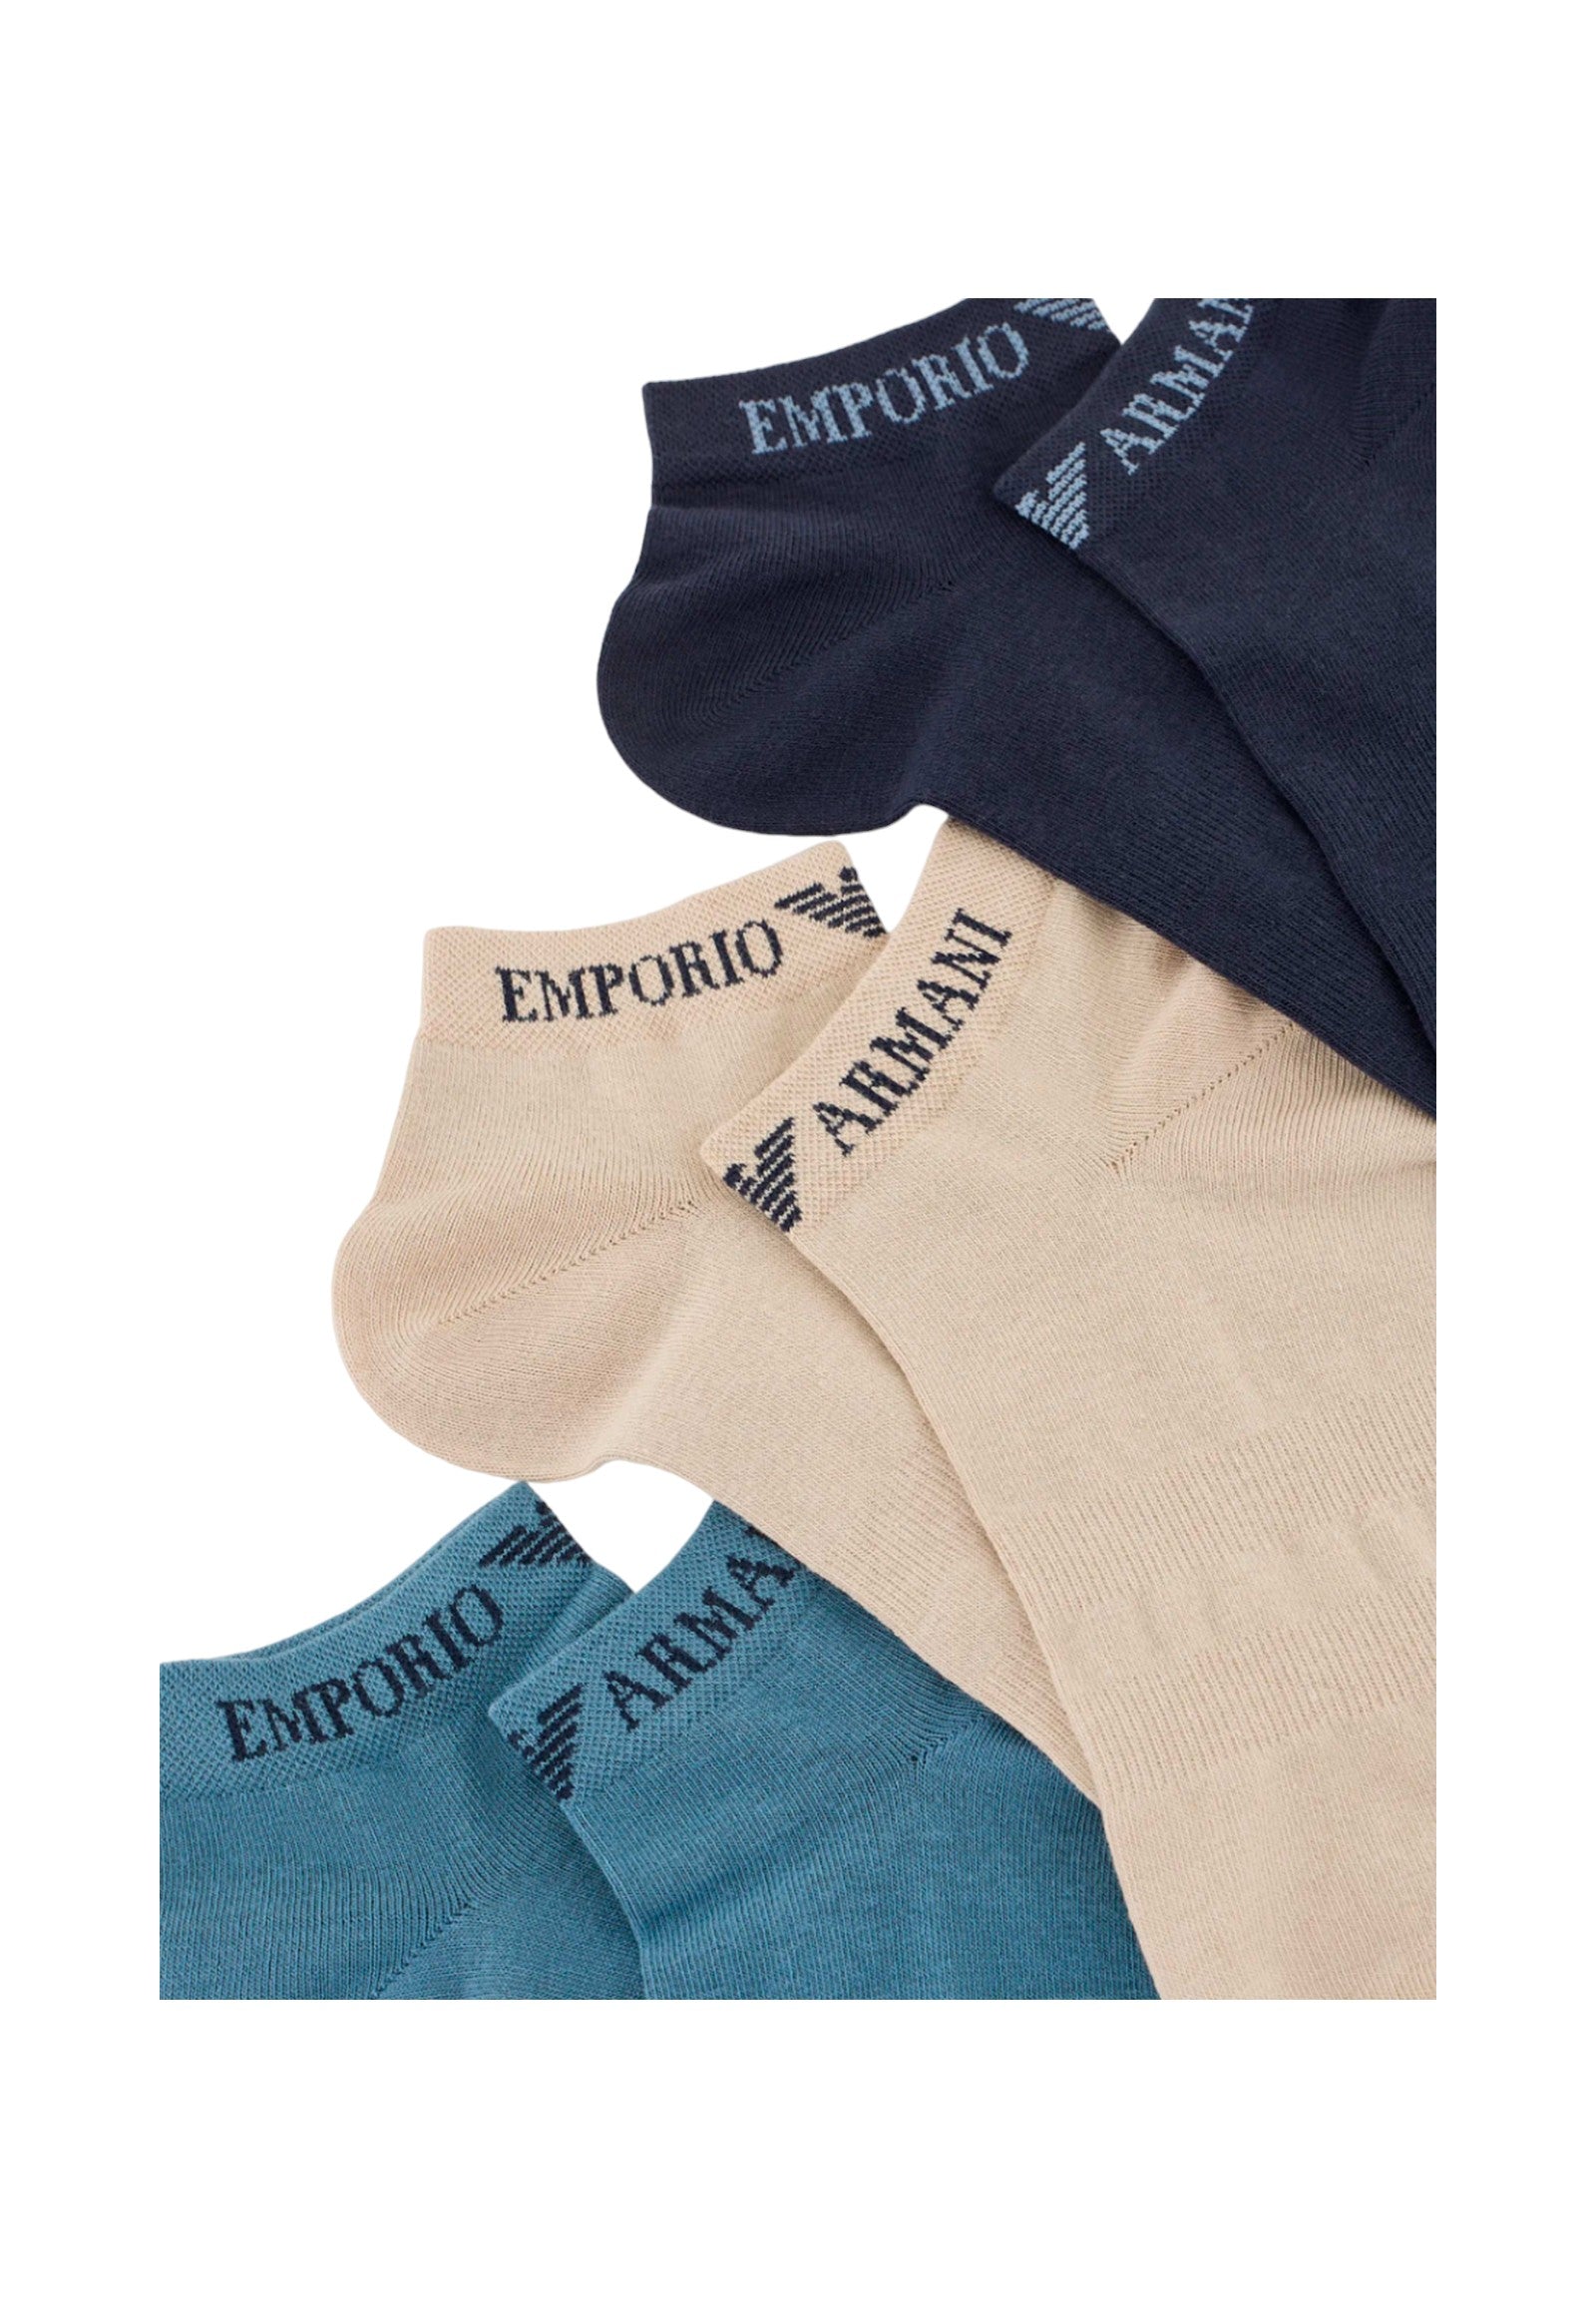 Emporio Armani Underwear Calzini 300048 Marine, Nudo, Avio